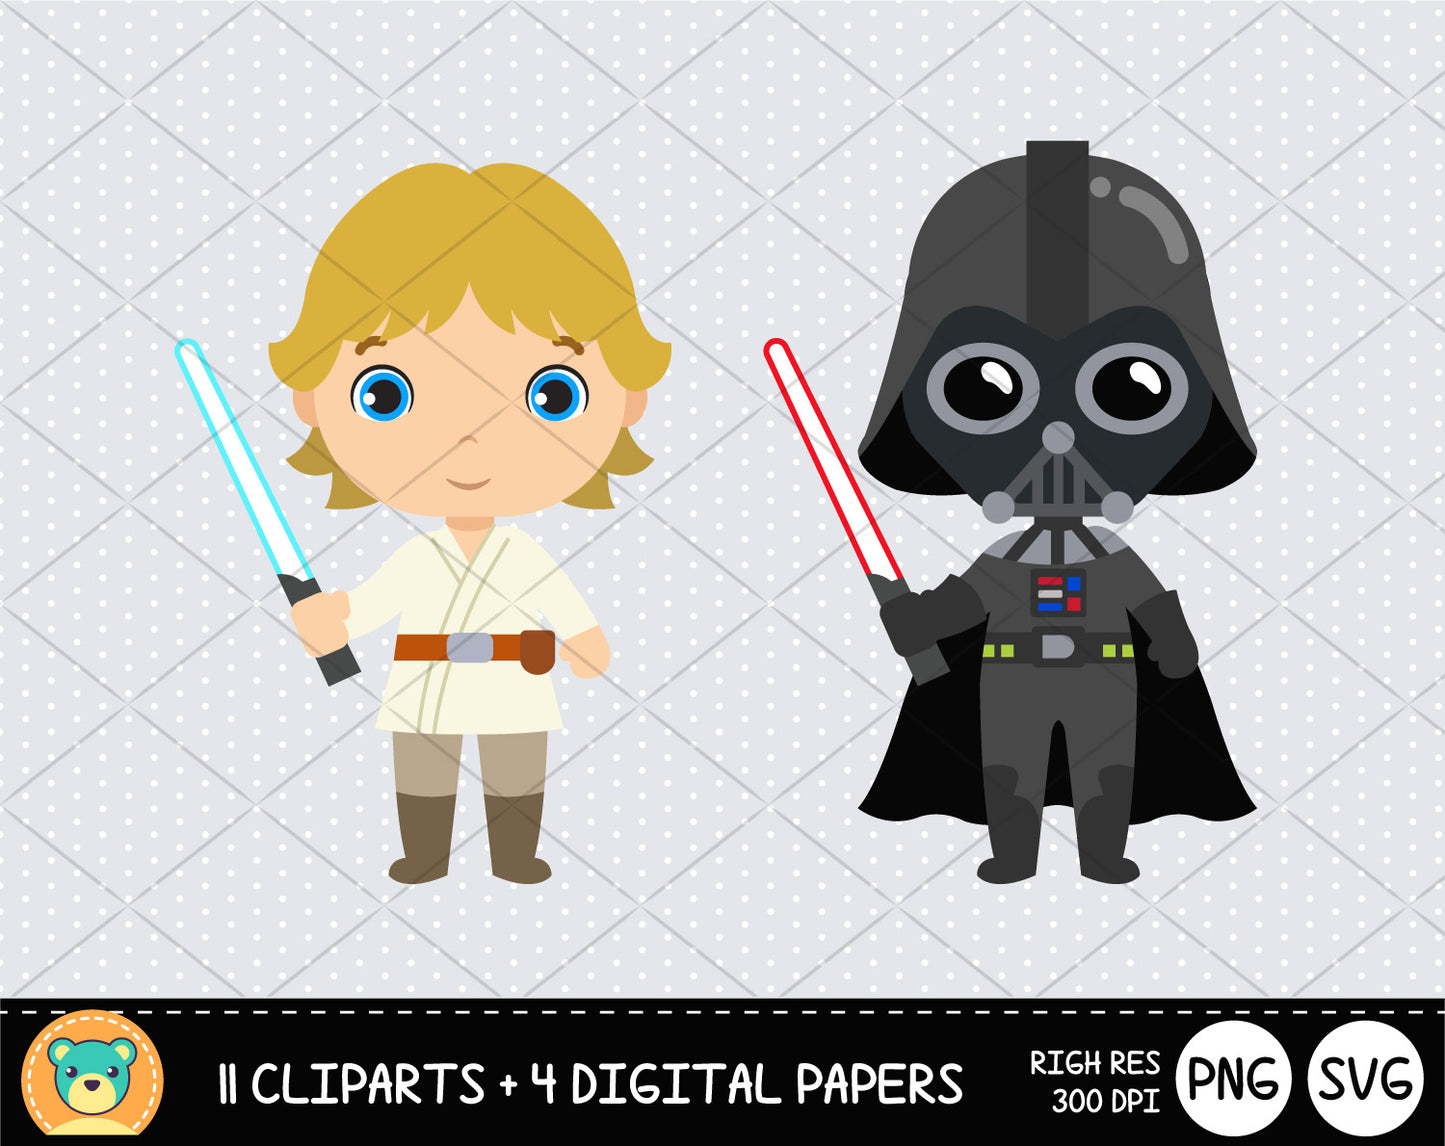 Cute Star Wars clipart set, Digital clip art for decoration, scrapbooking, PNG, SVG, instant download